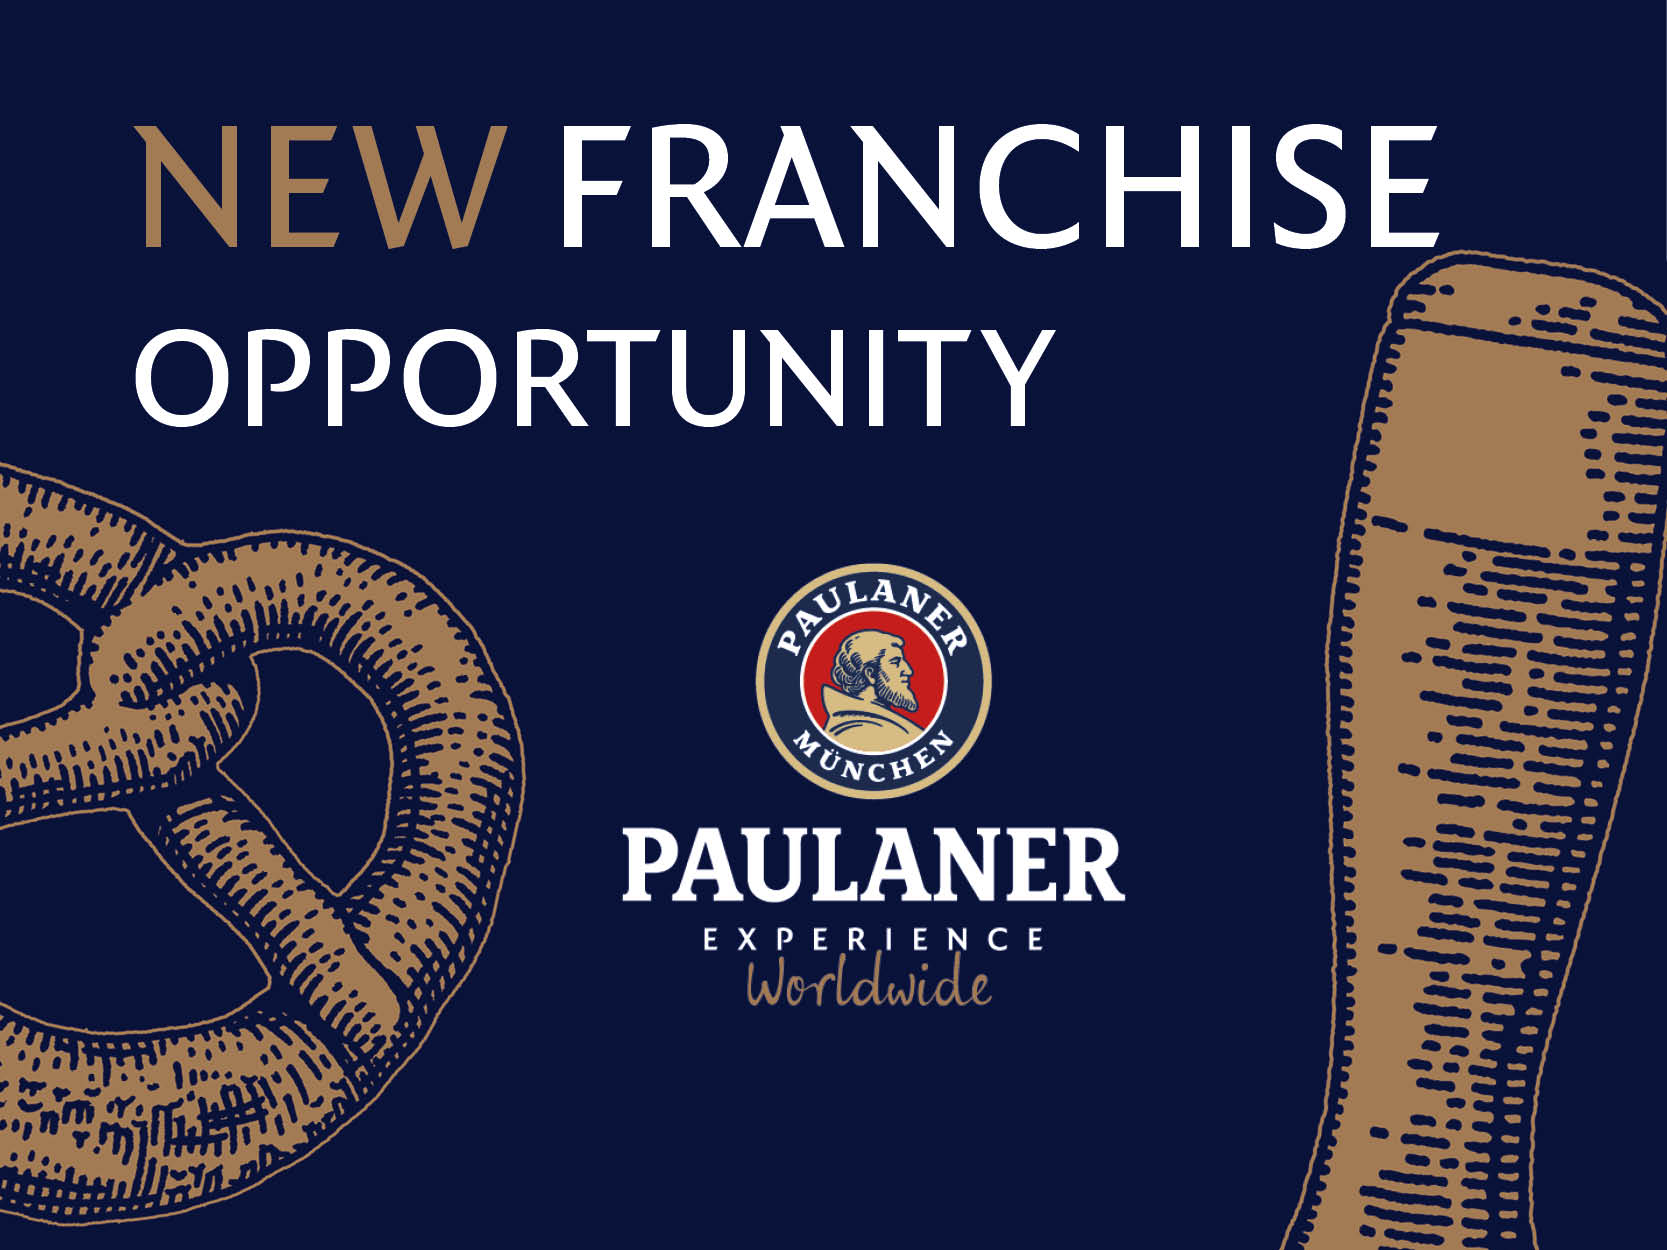 paulaner franchise opportunity cover photo